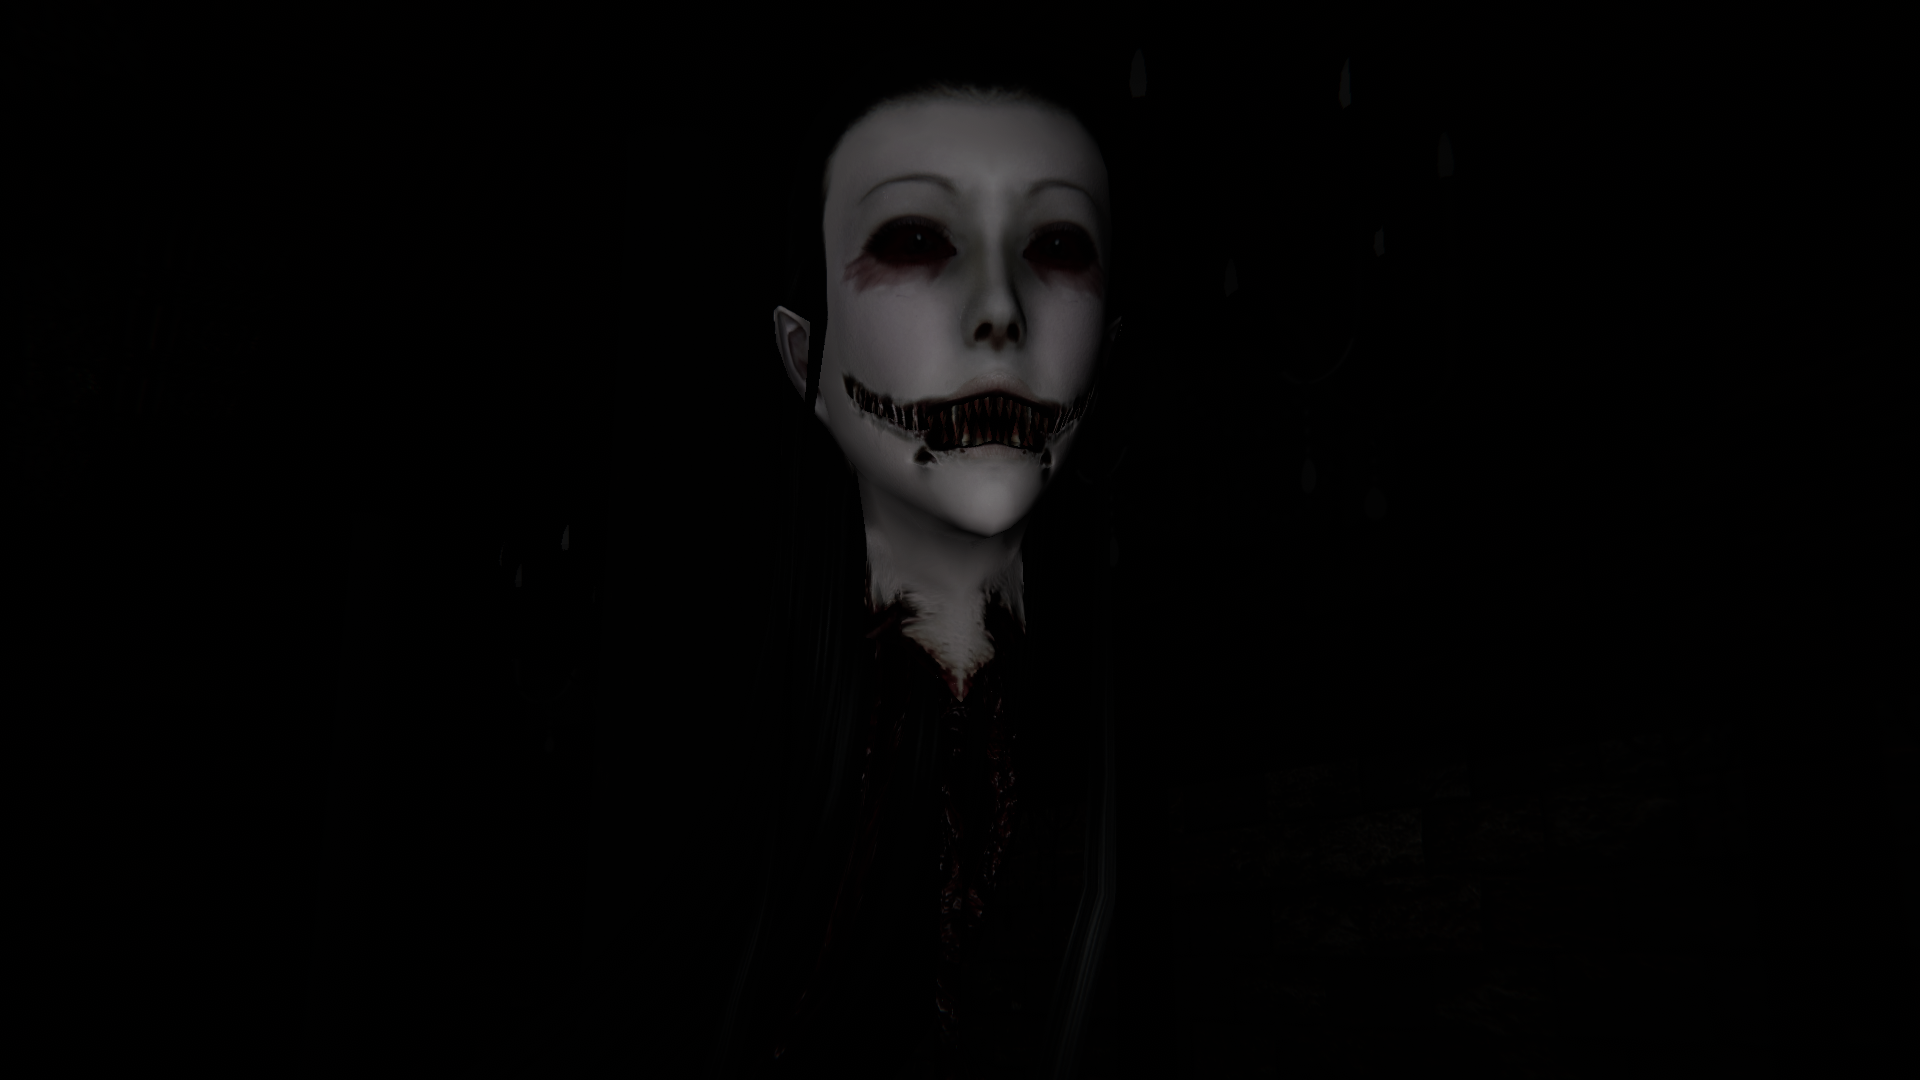 Eyes the horror game remastered: 😱New GRAND update v. 3.2.8 (PC